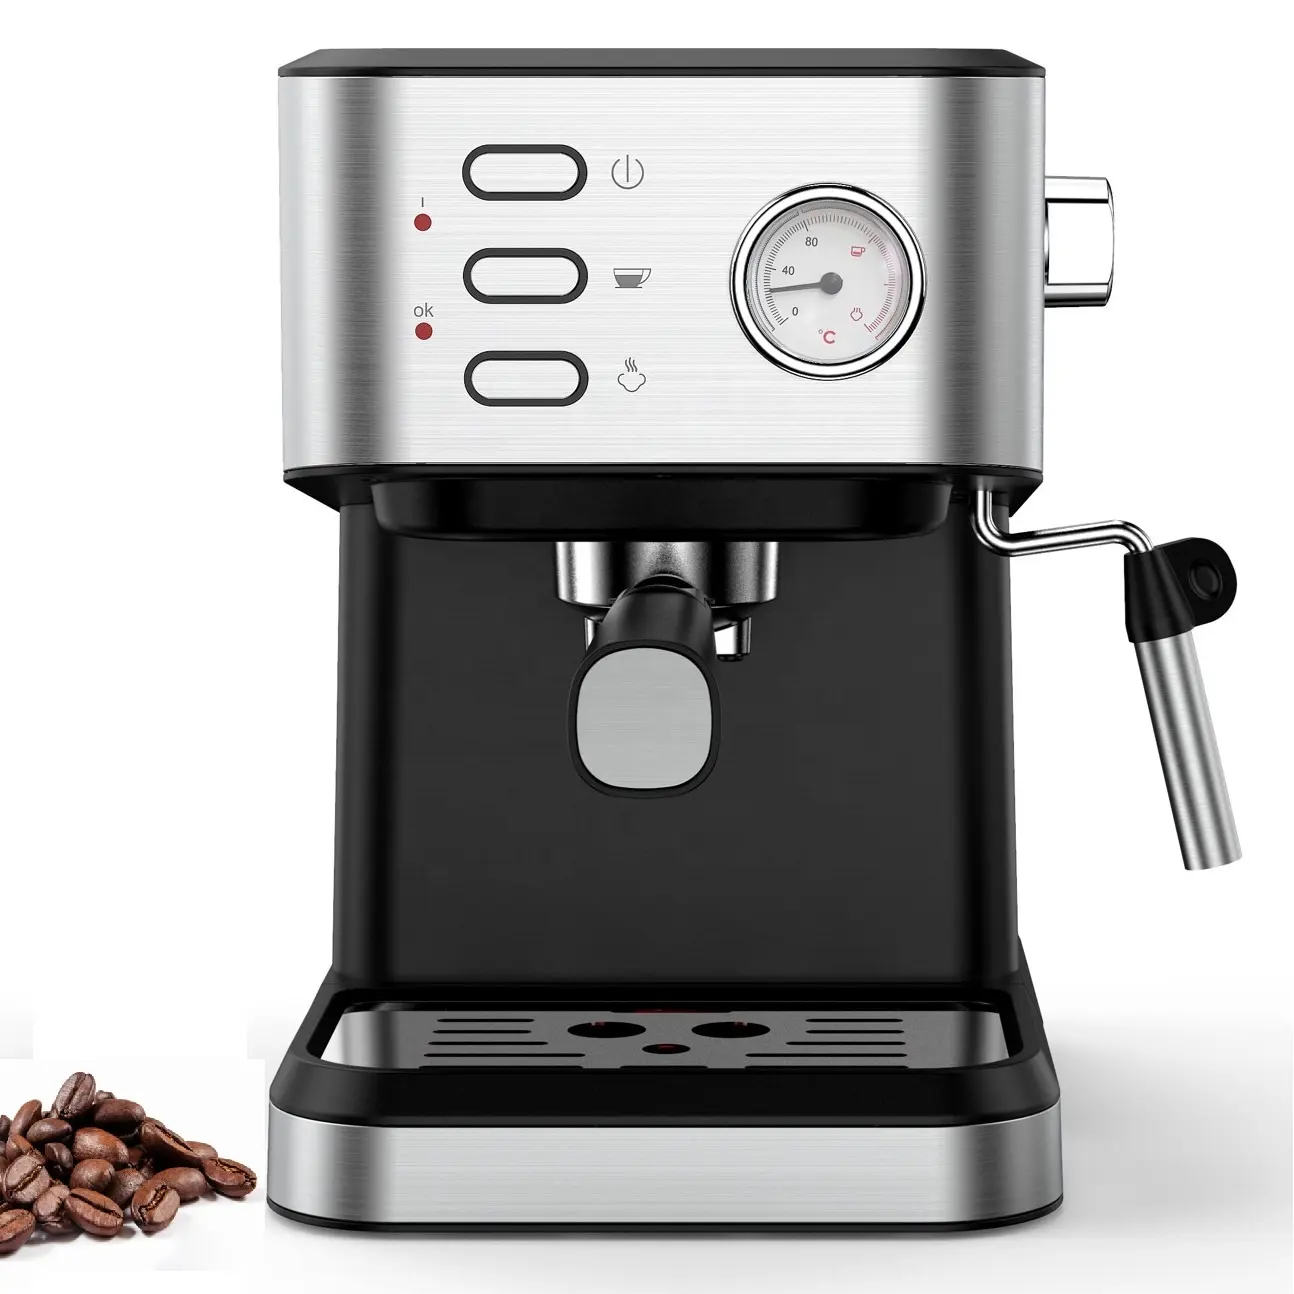 1.5L Detachable Water Tank hot coffee temperature display 15 Bar ulka Espresso Cappuccino Coffee Maker